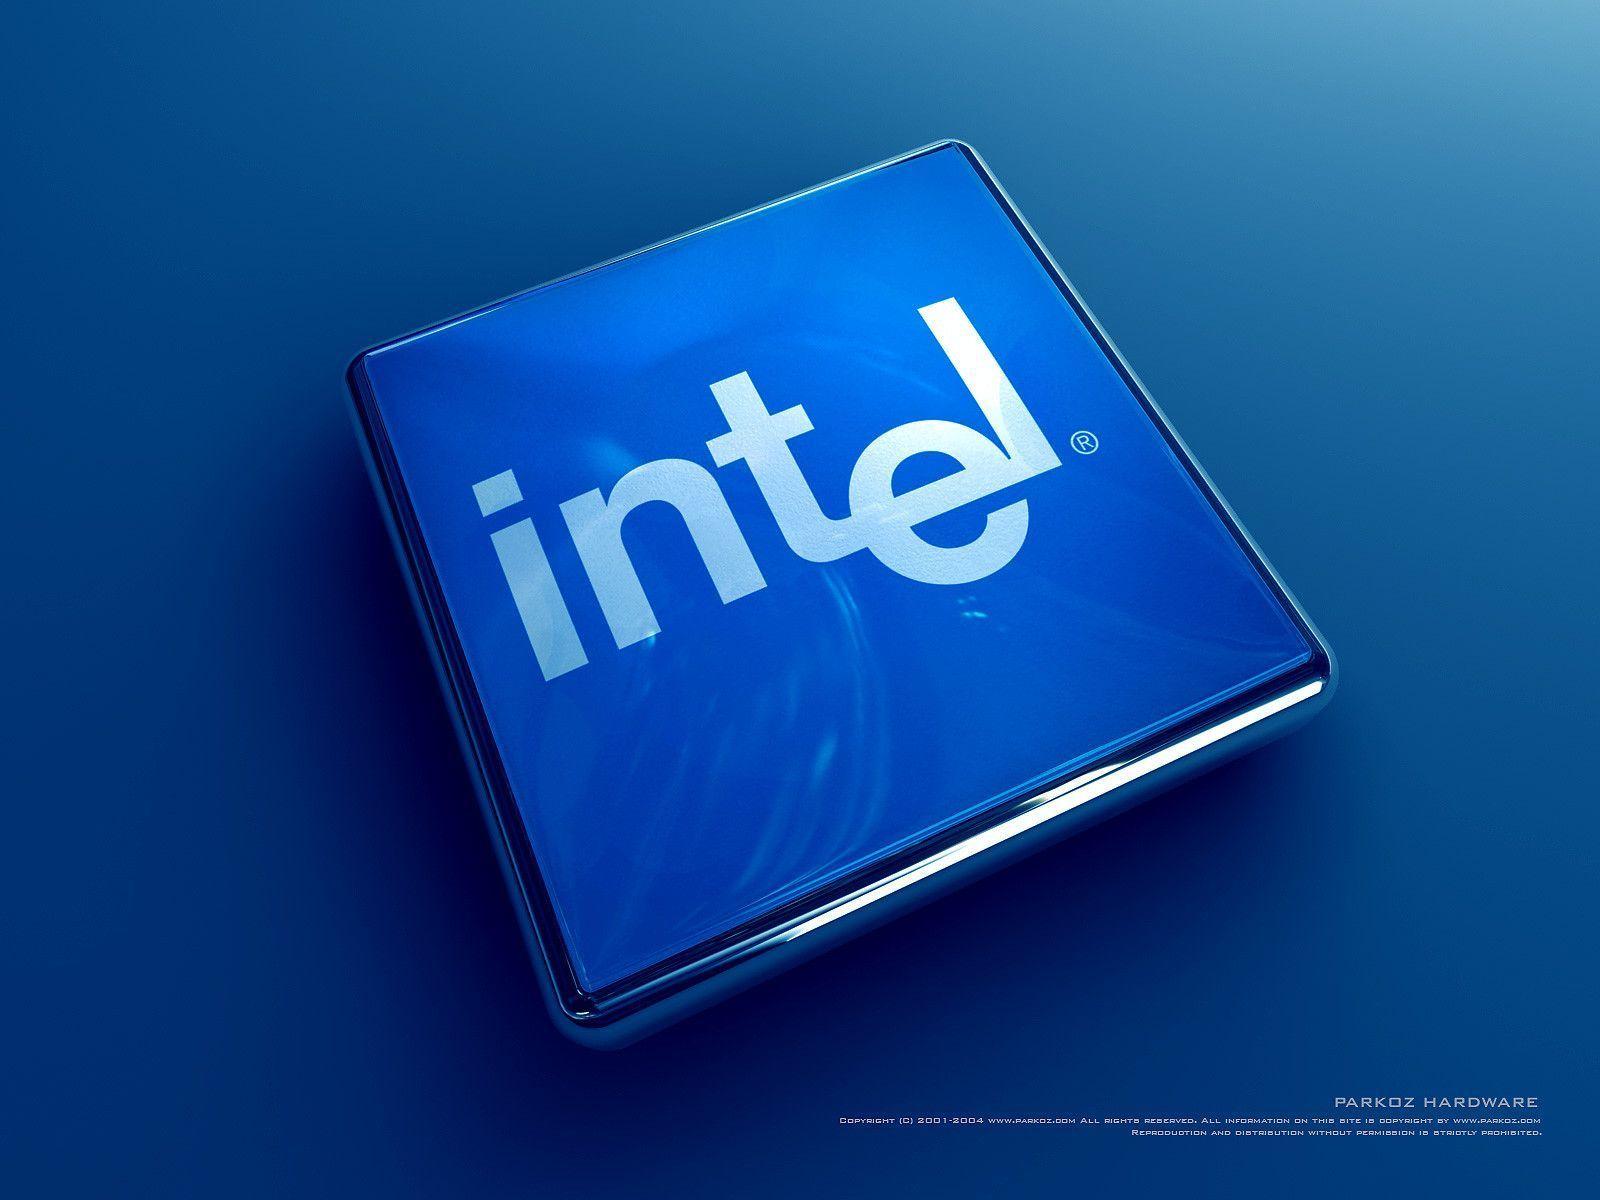 Intel I7 Wallpaper Photo 8947 HD Picture. Best Wallpaper Photo